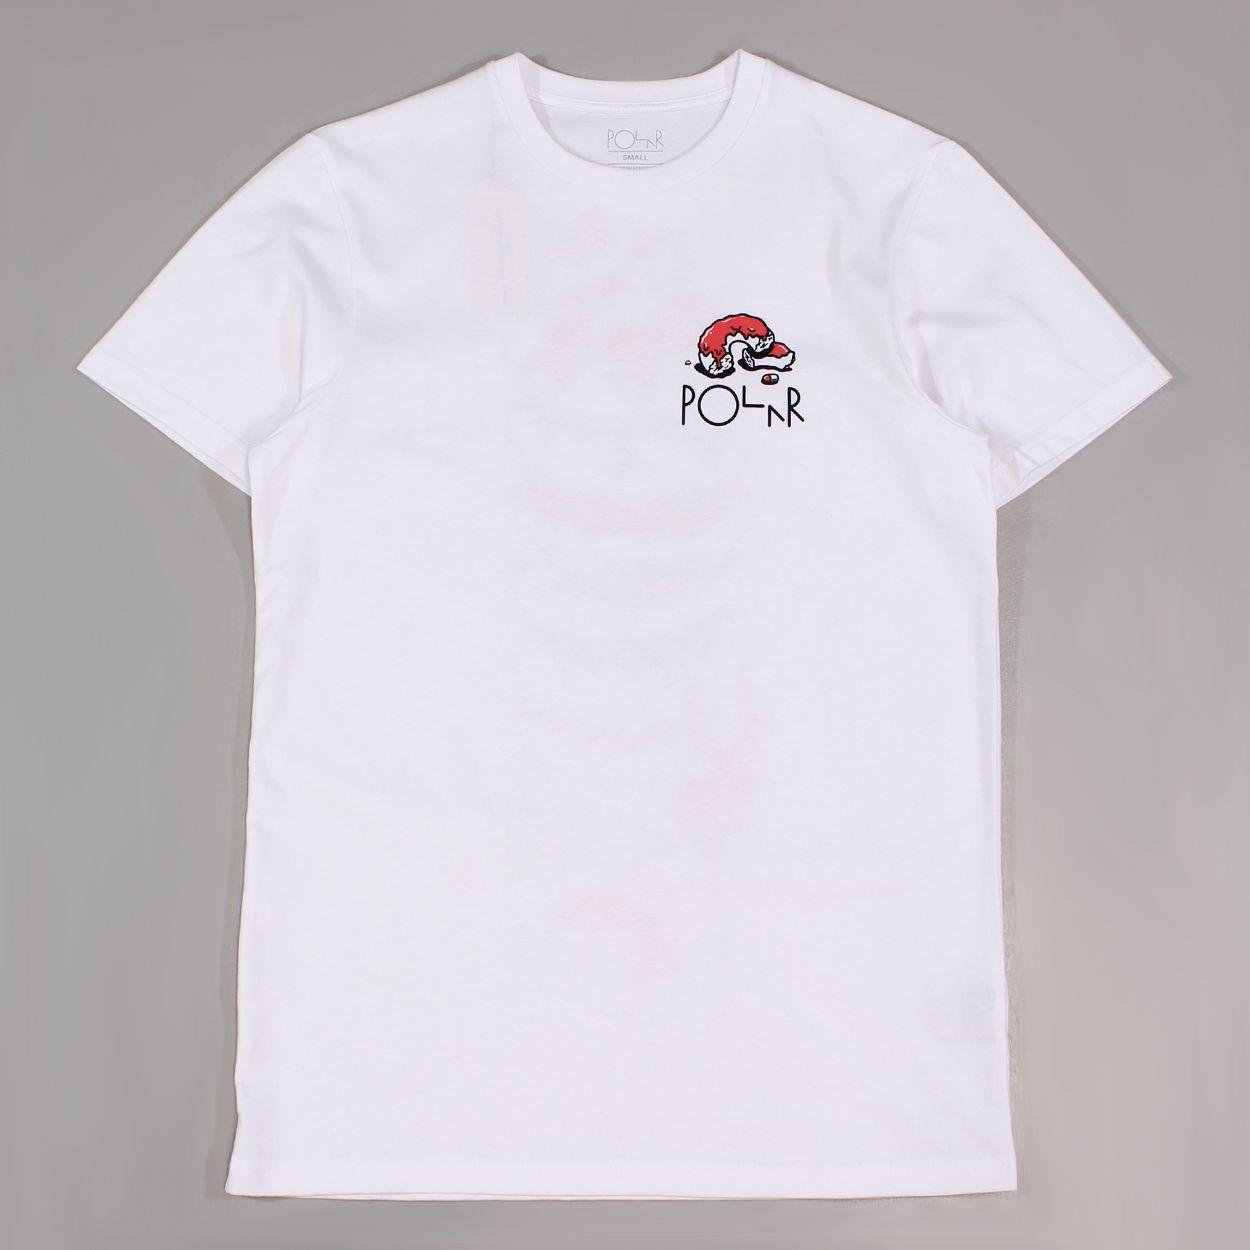 White and Red Corner Logo - Polar Mens Jacobs Corner Donut Kingdom T-Shirt White Blue Red £18.00